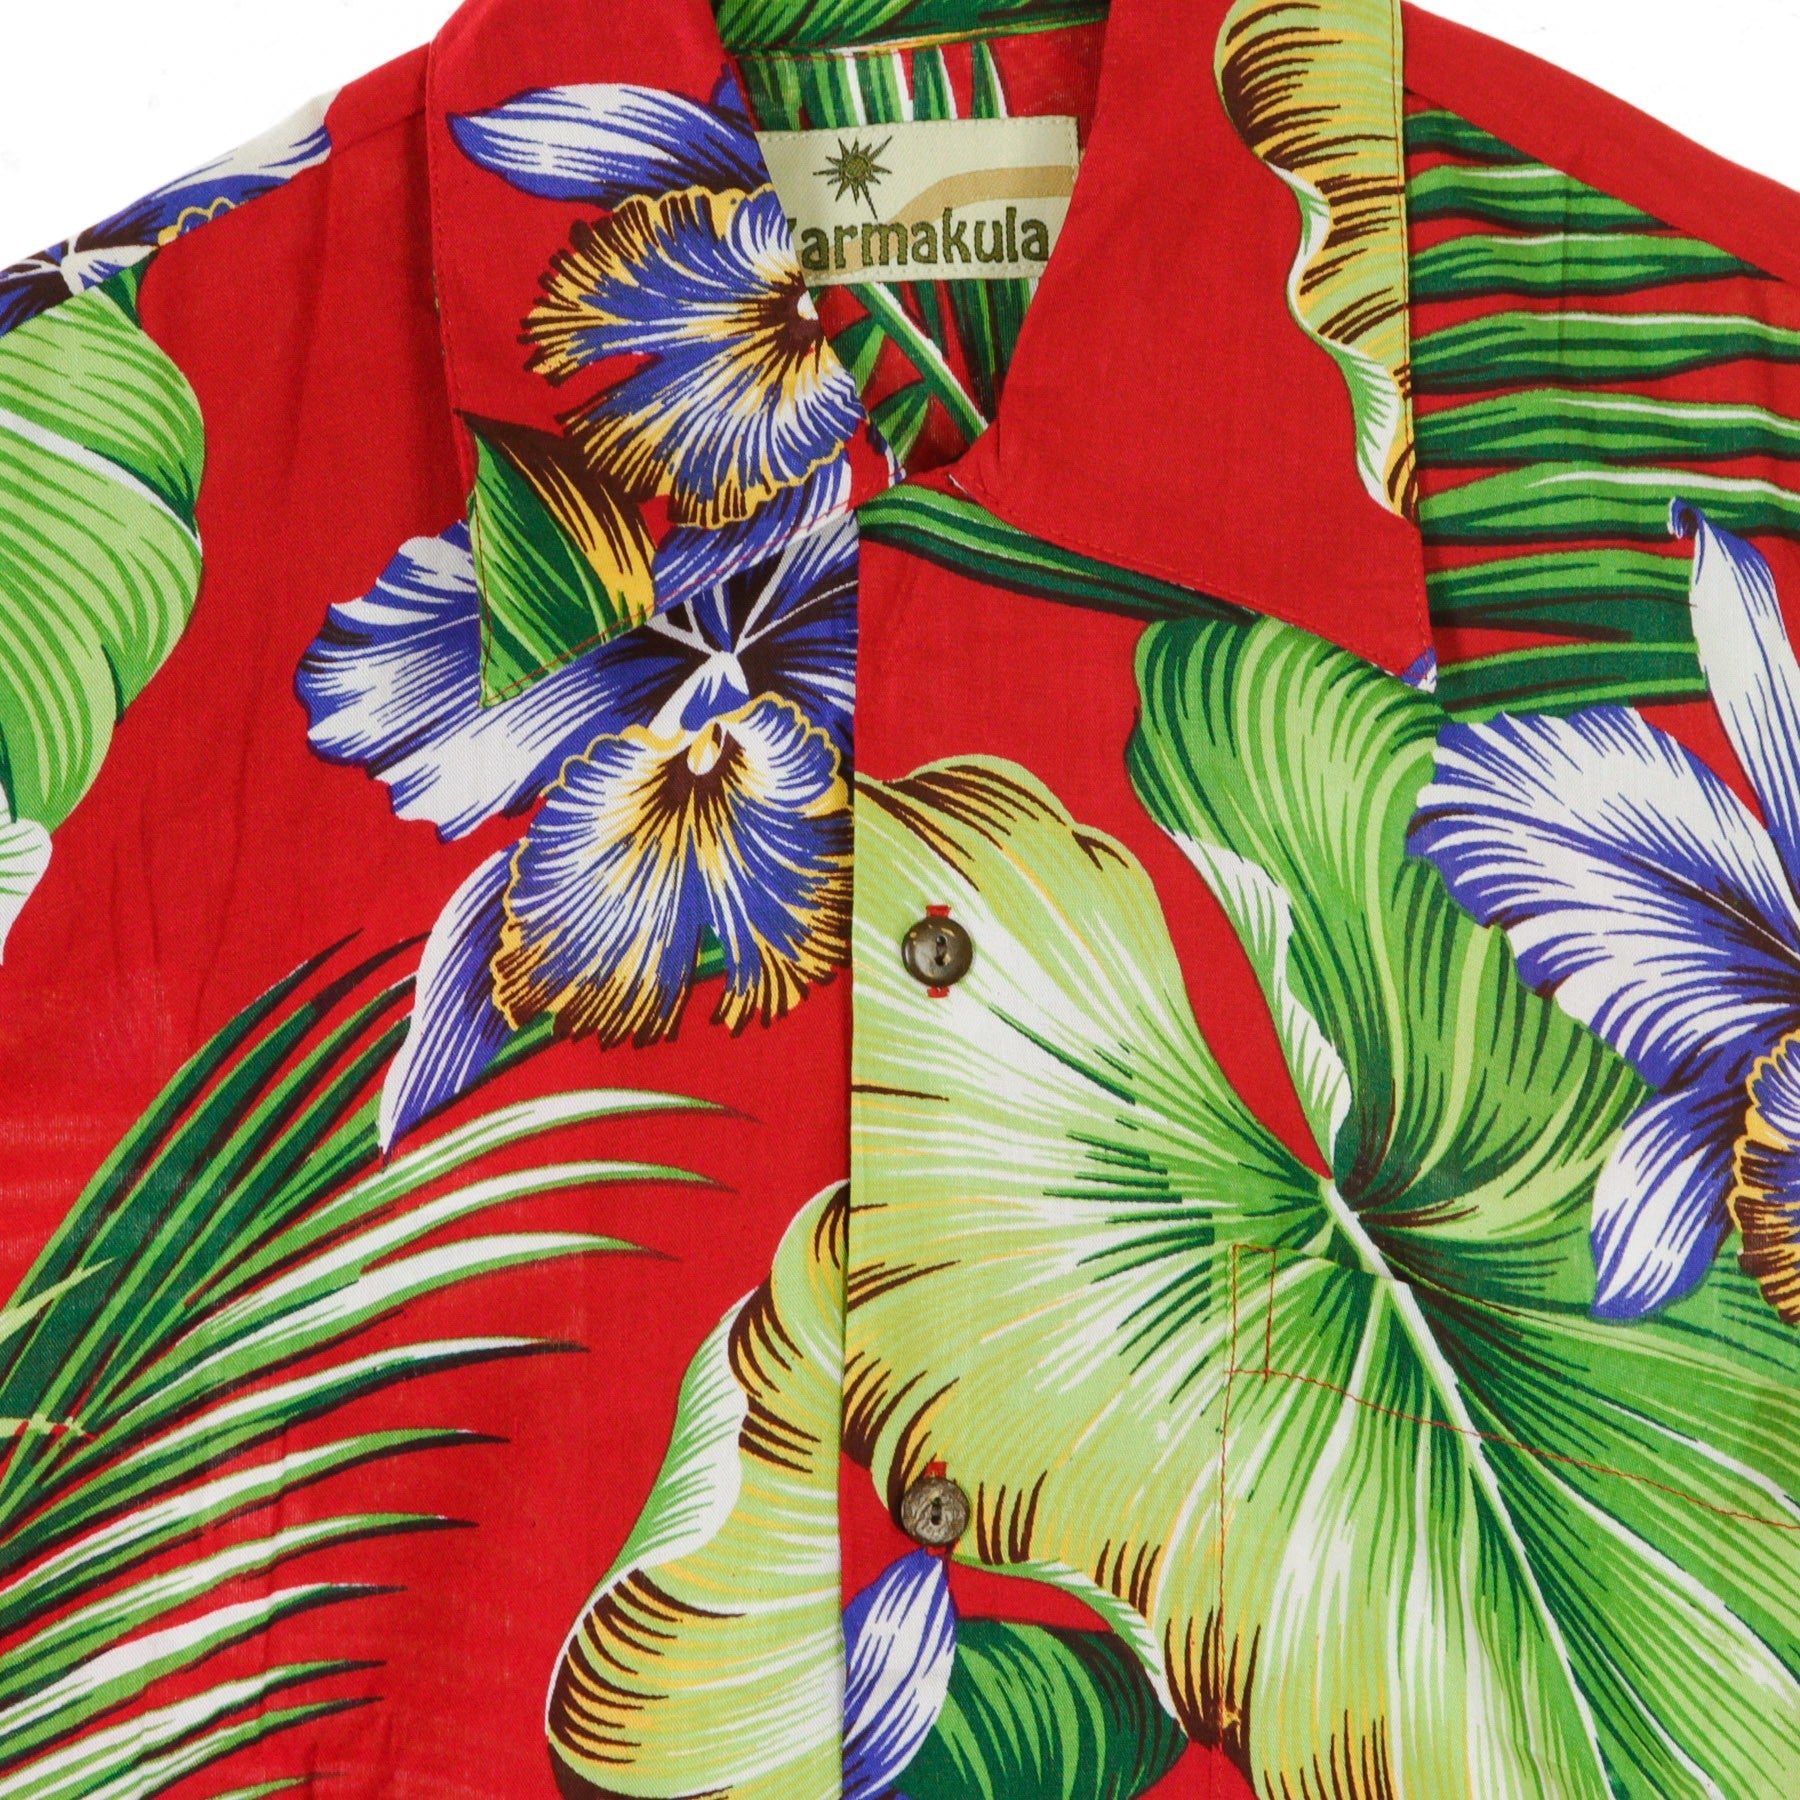 Short Sleeve Men's Hawaiian Shirt Manoa Red